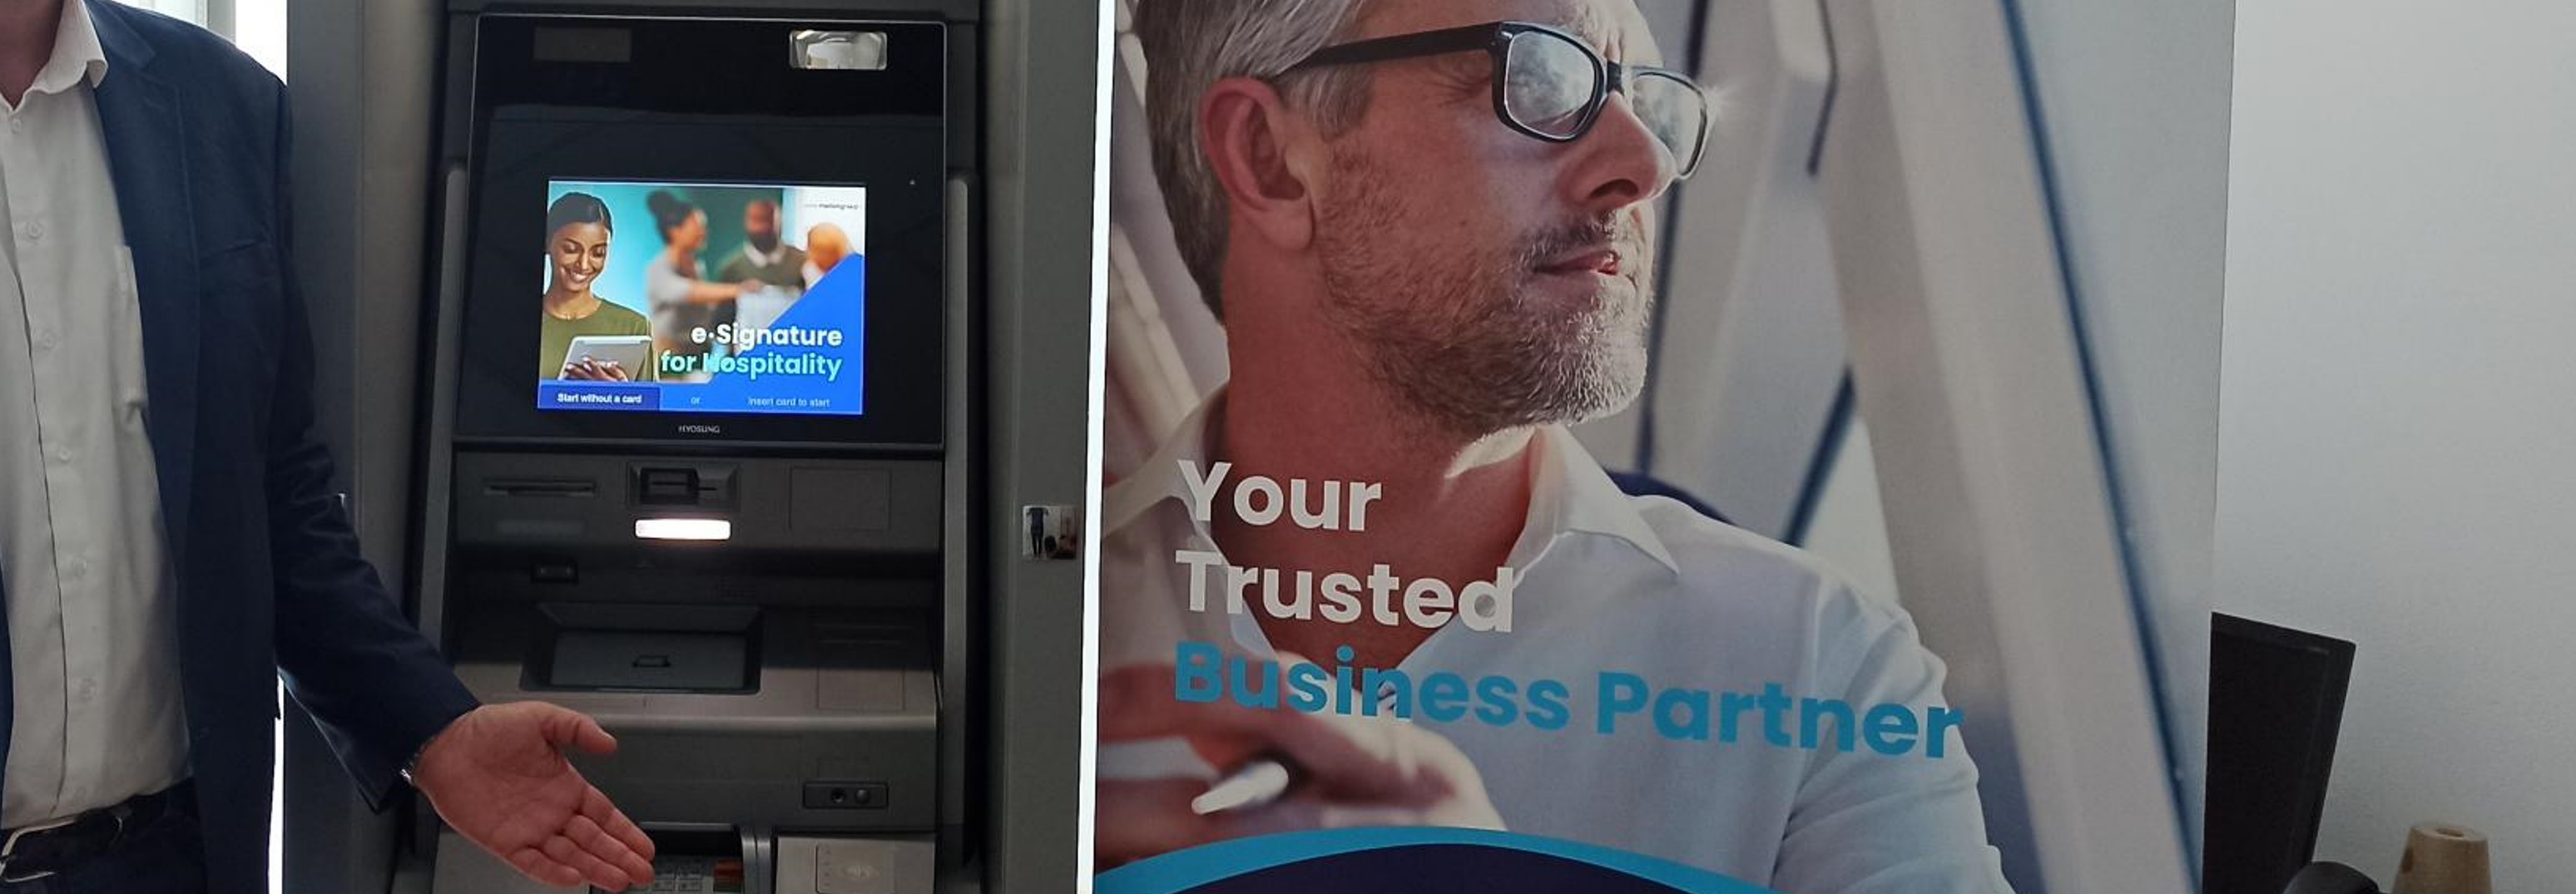 Mellon Bulgaria Showcases Innovative Hyosung ATMs in Sofia